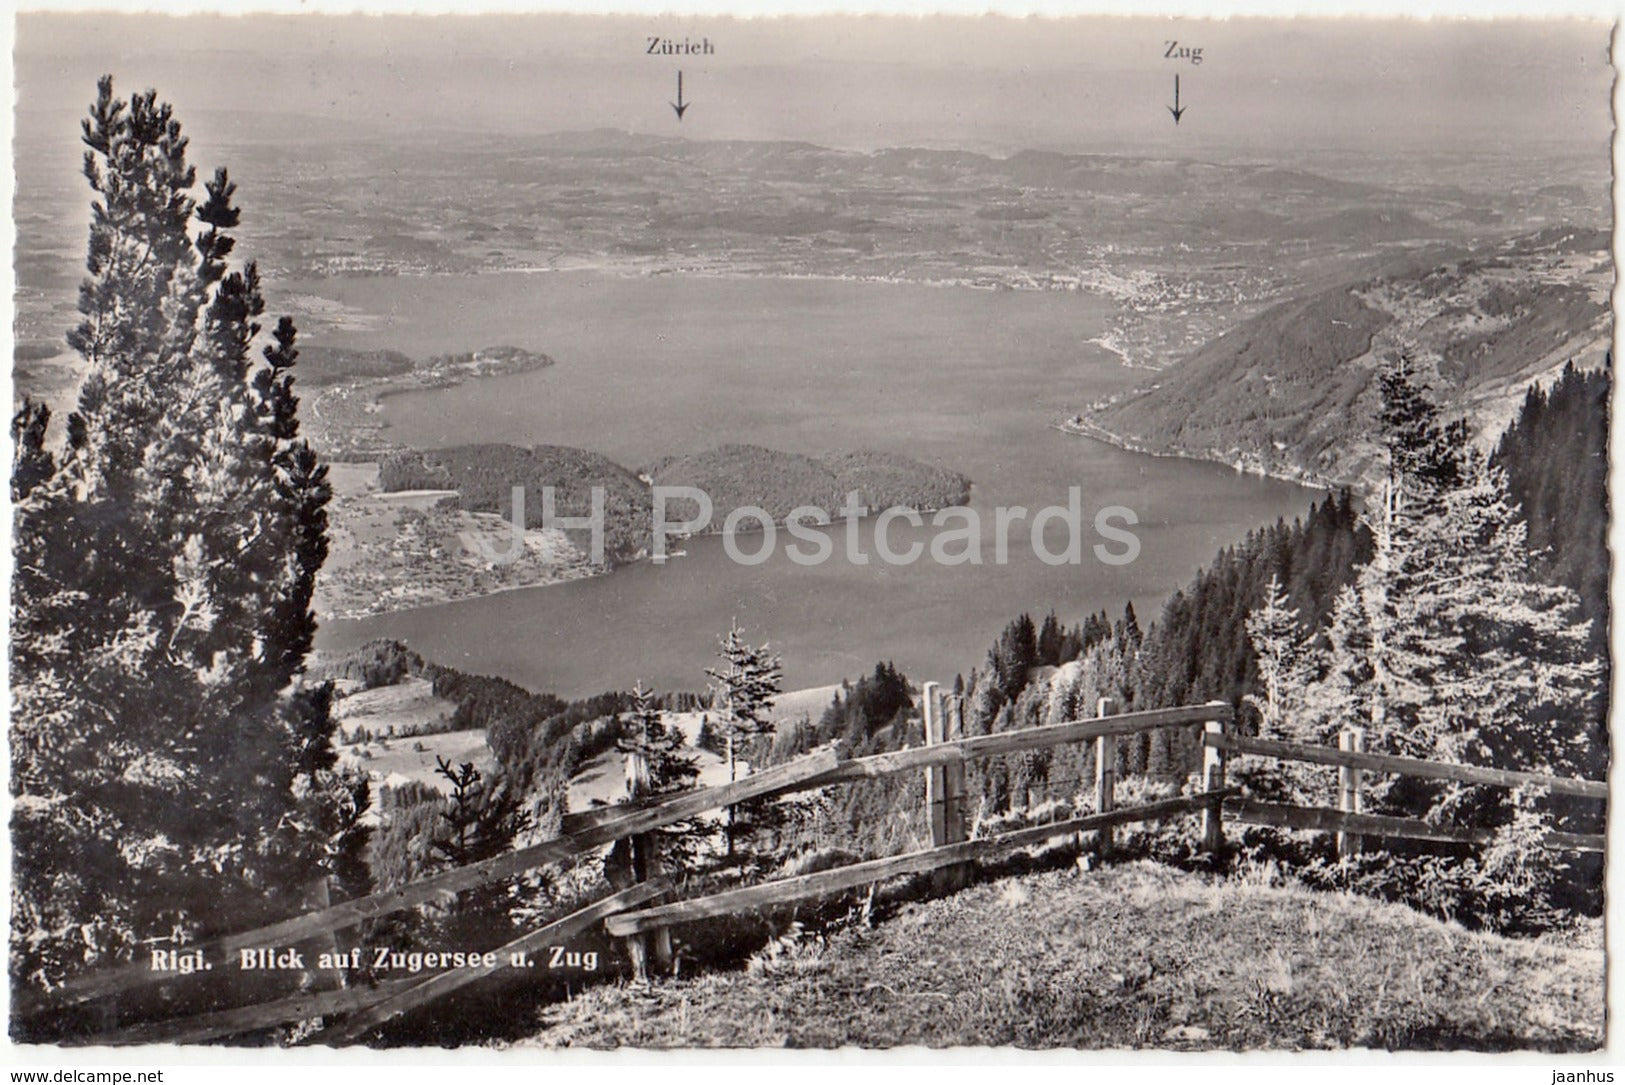 Rigi - Blick auf Zugersee u. Zug - 8660 - Switzerland - 1950 - used - JH Postcards